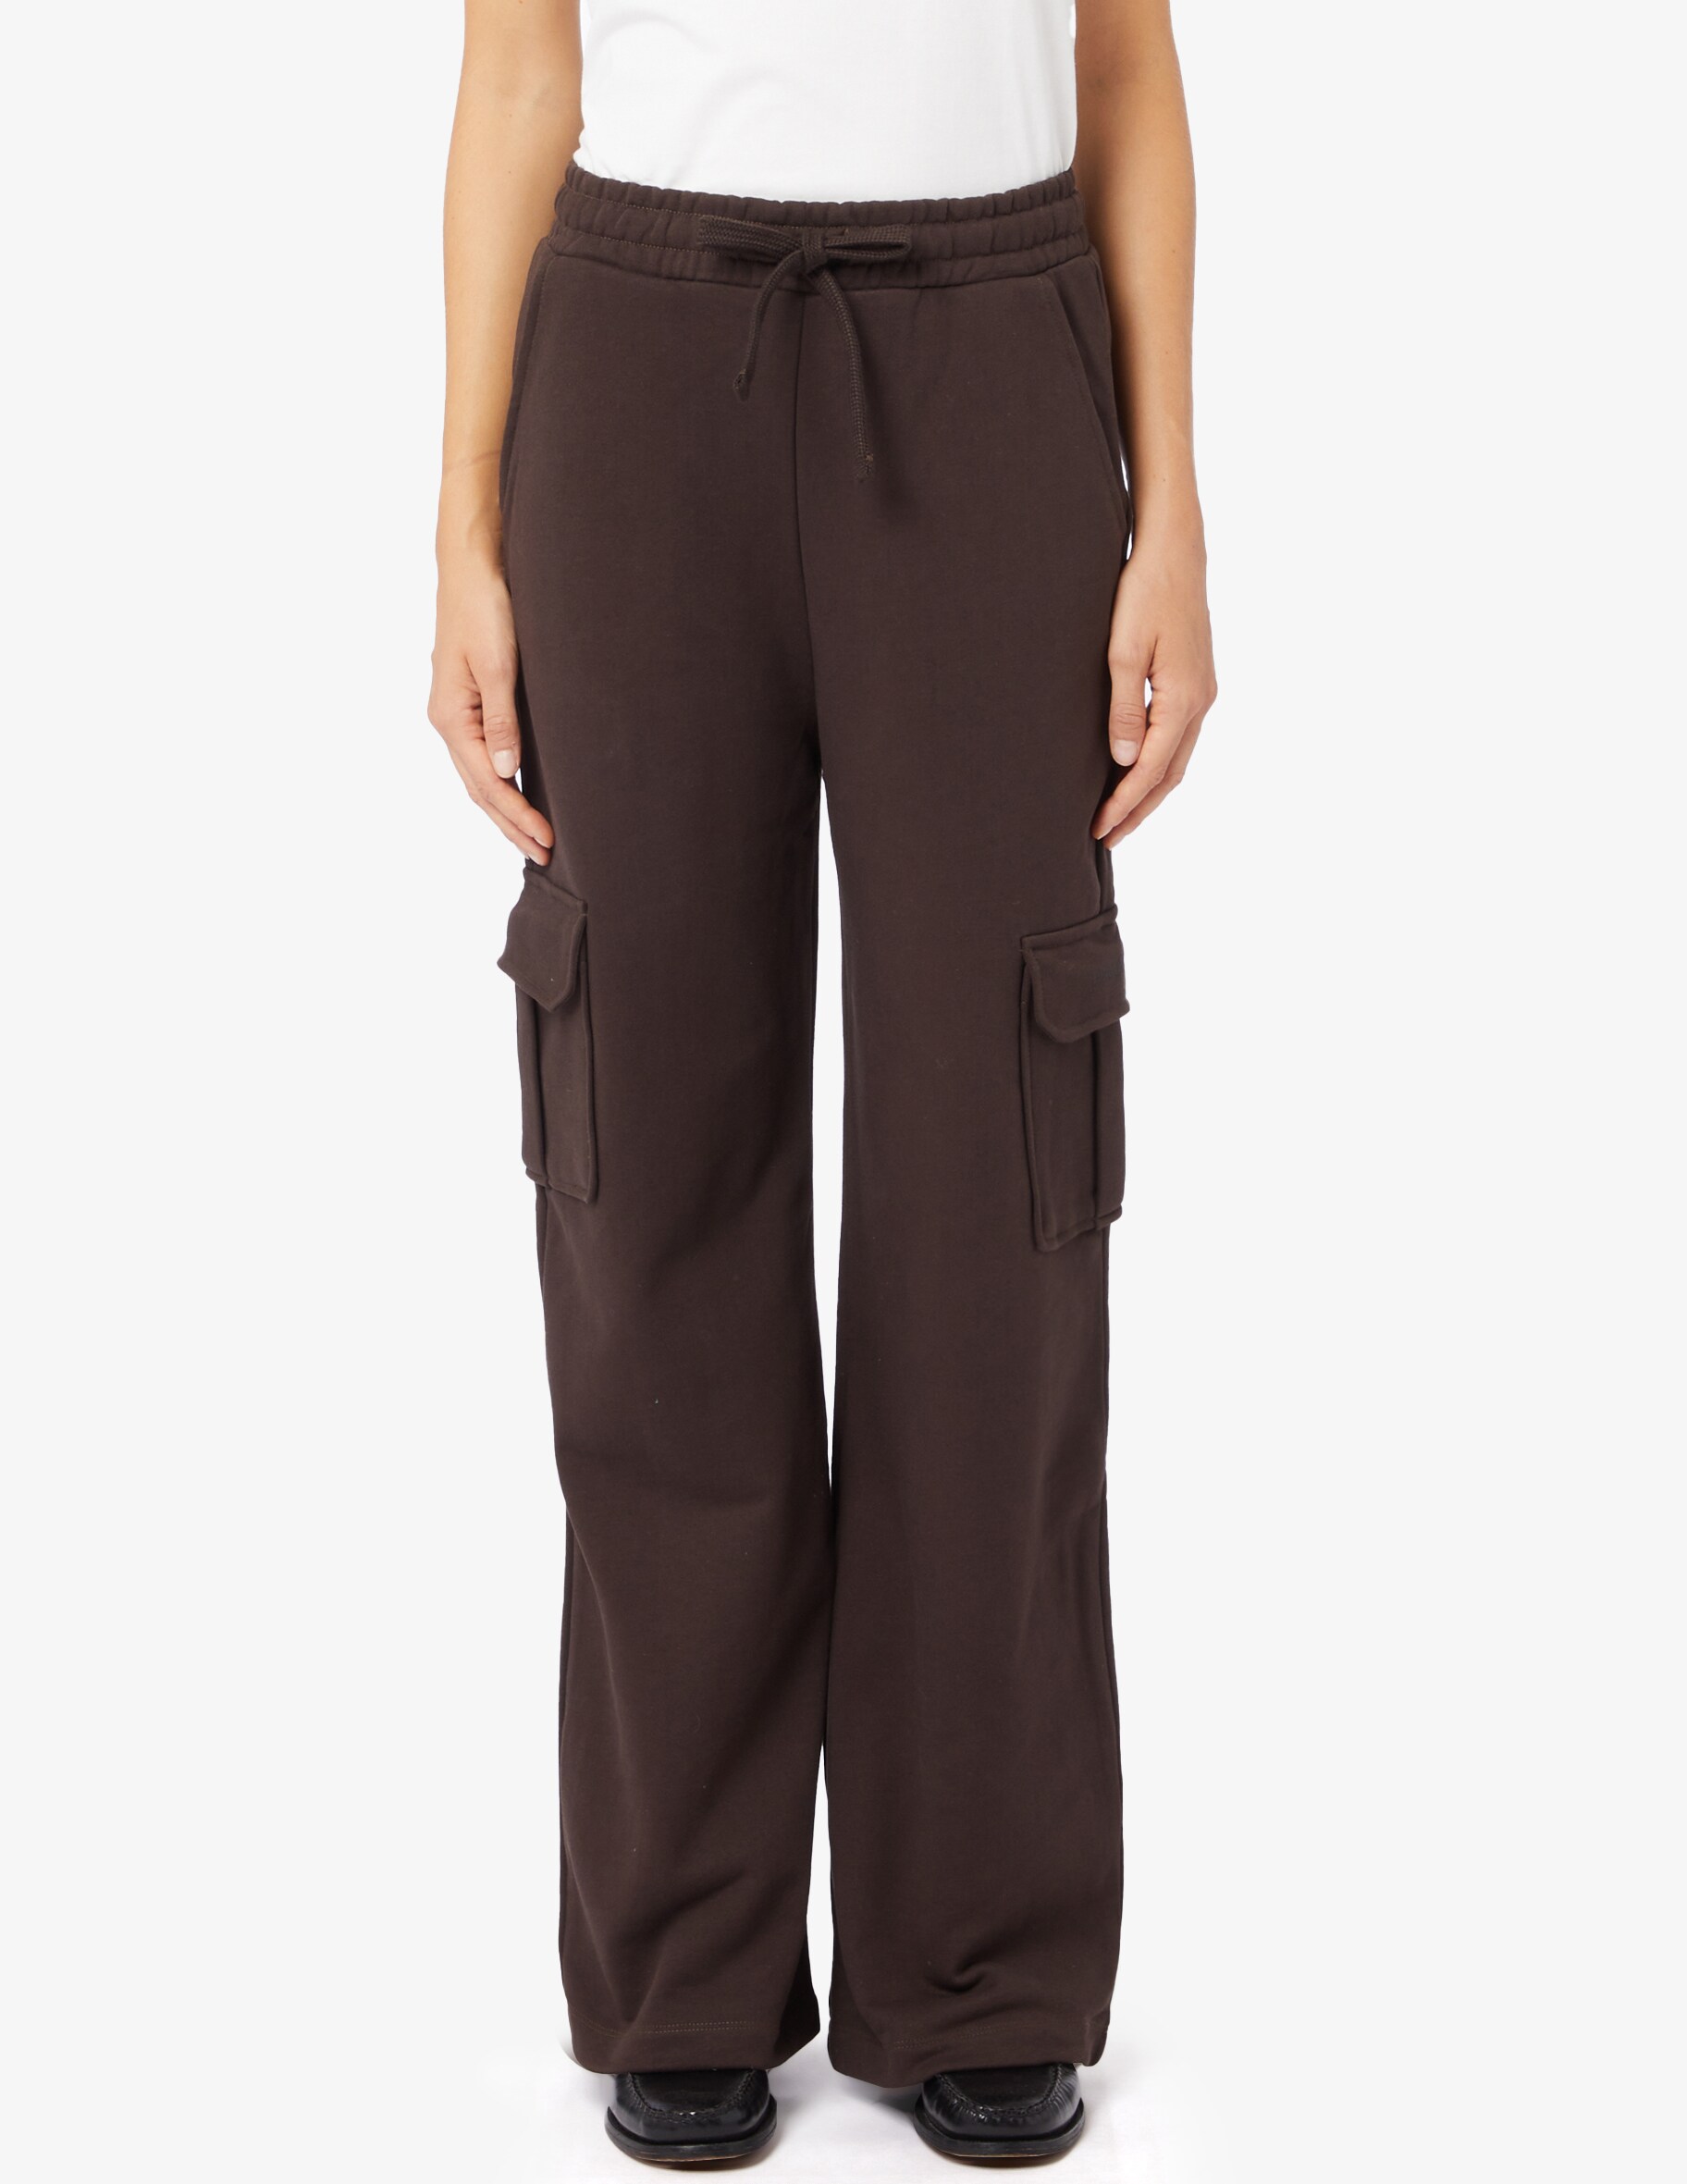 Широкие брюки из хлопка HINNOMINATE, коричневый цена и фото